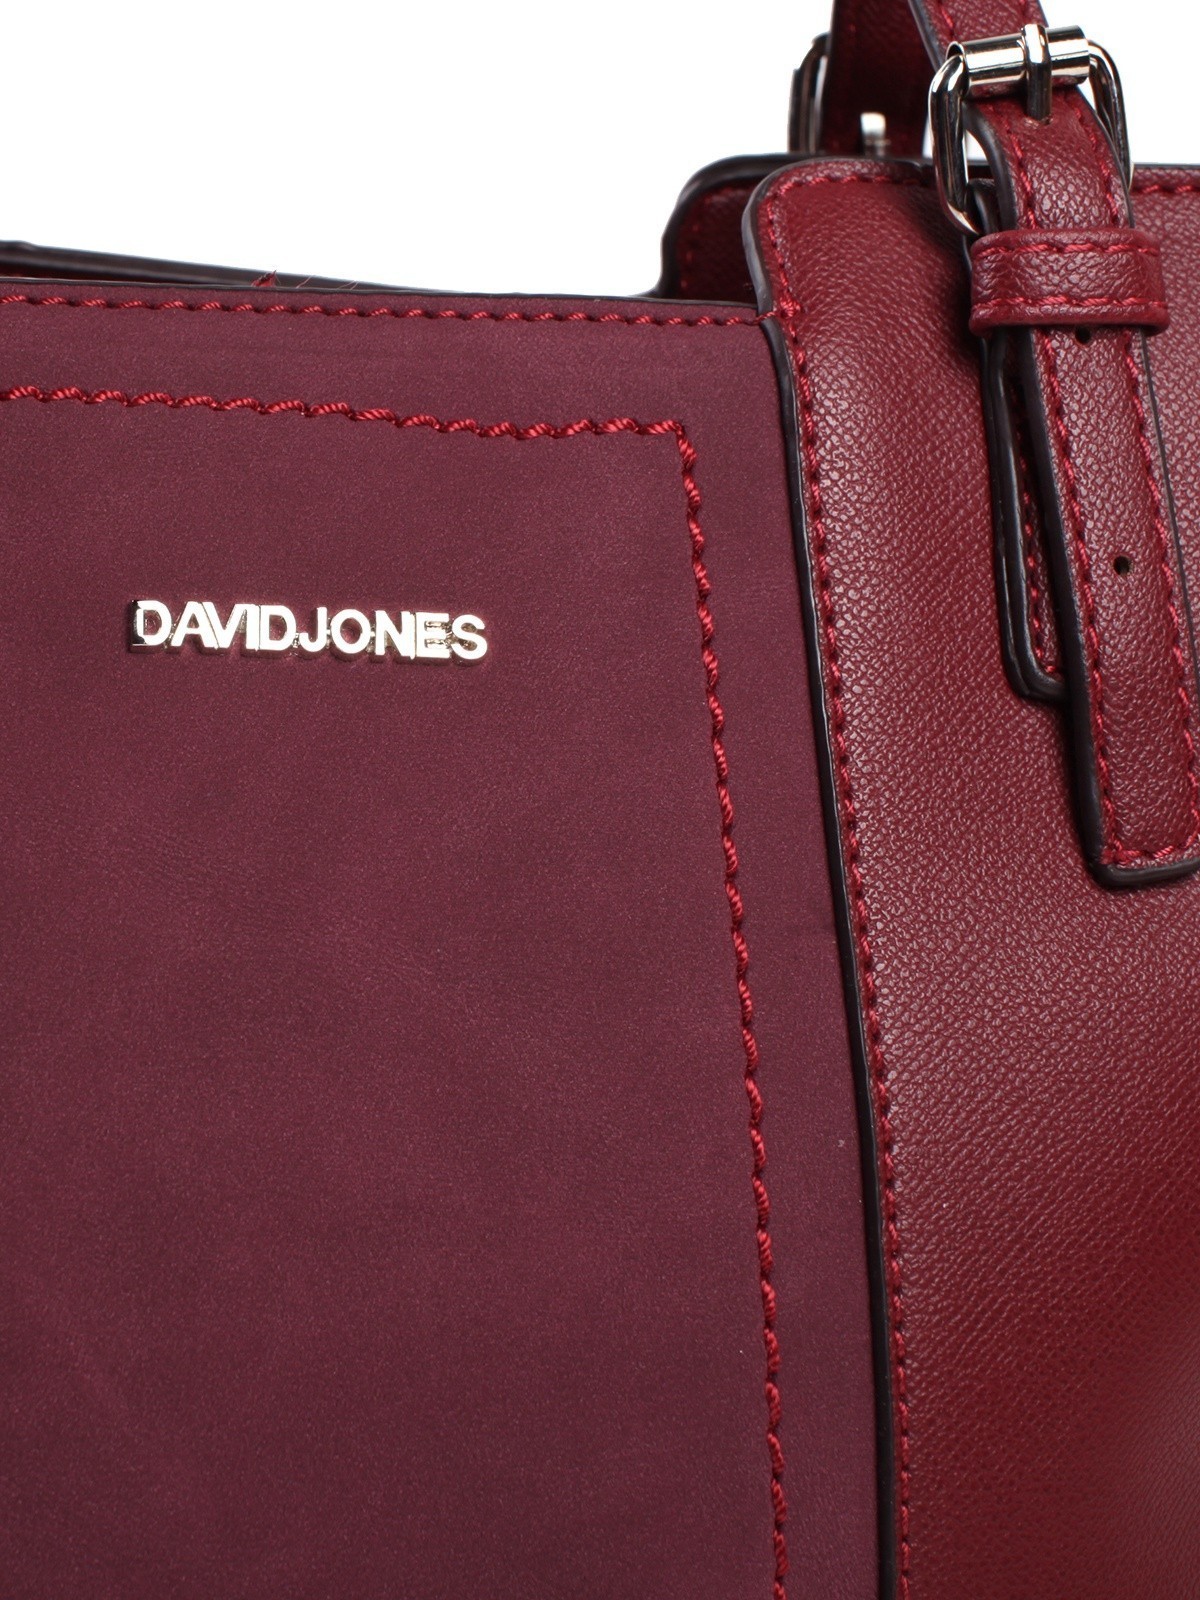 David Jones Shoulder/Hand bag Red